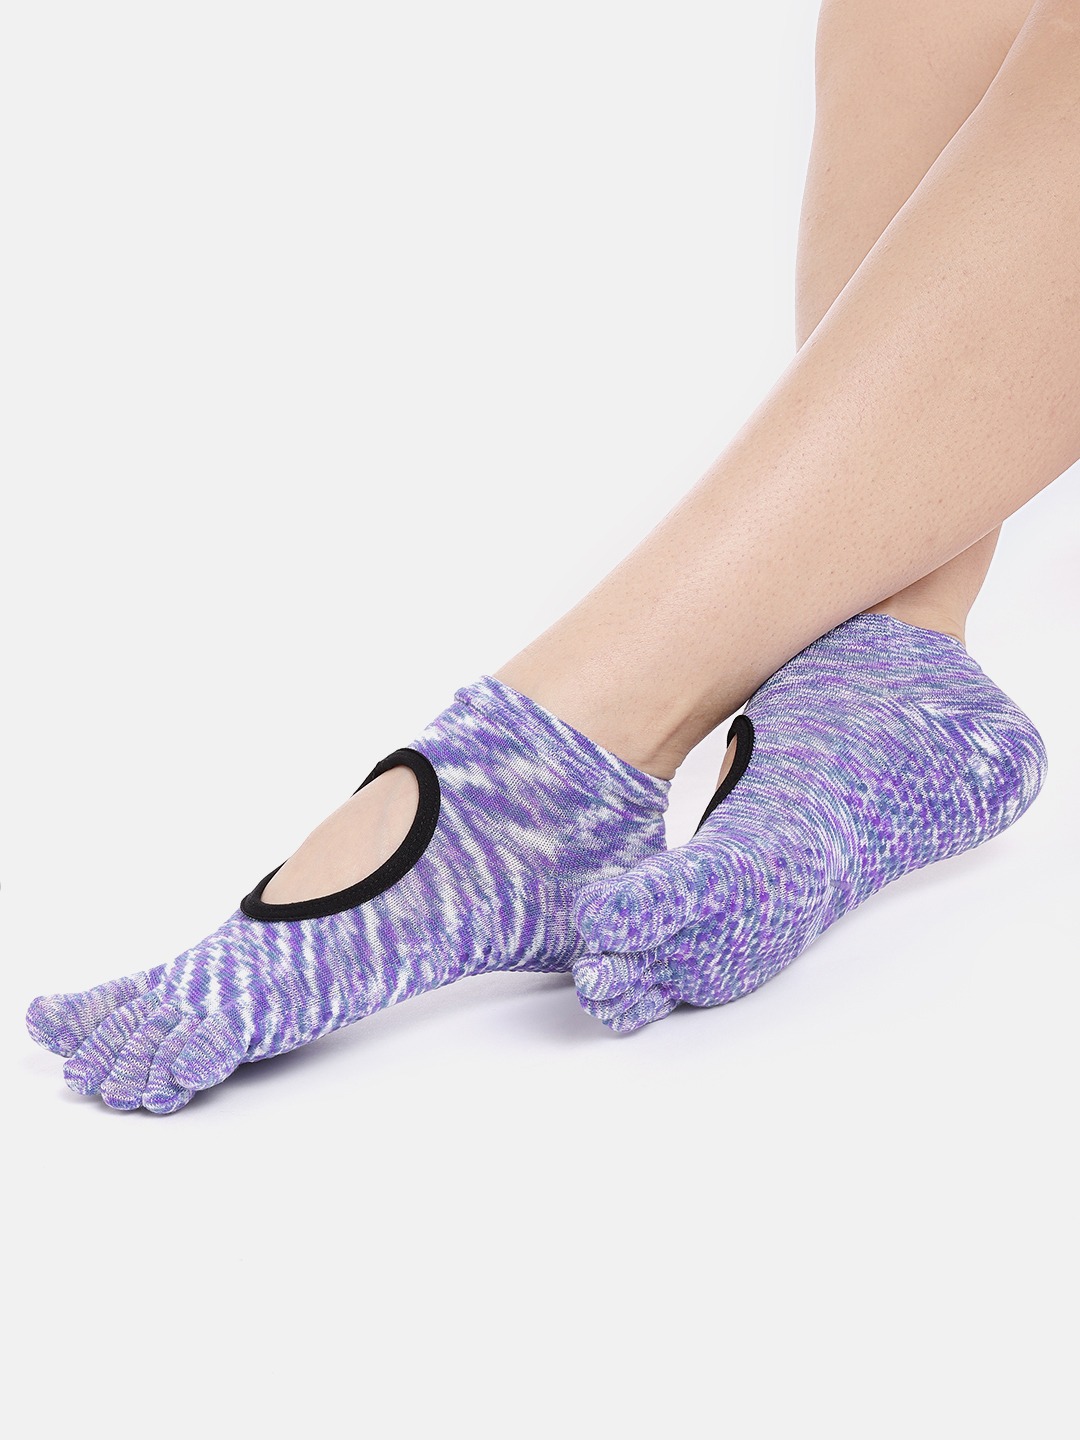 Accessories Socks | HRX by Hrithik Roshan Women Purple & Grey Grindle Effect Ankle Length Five Toe Yoga Socks - LX18139